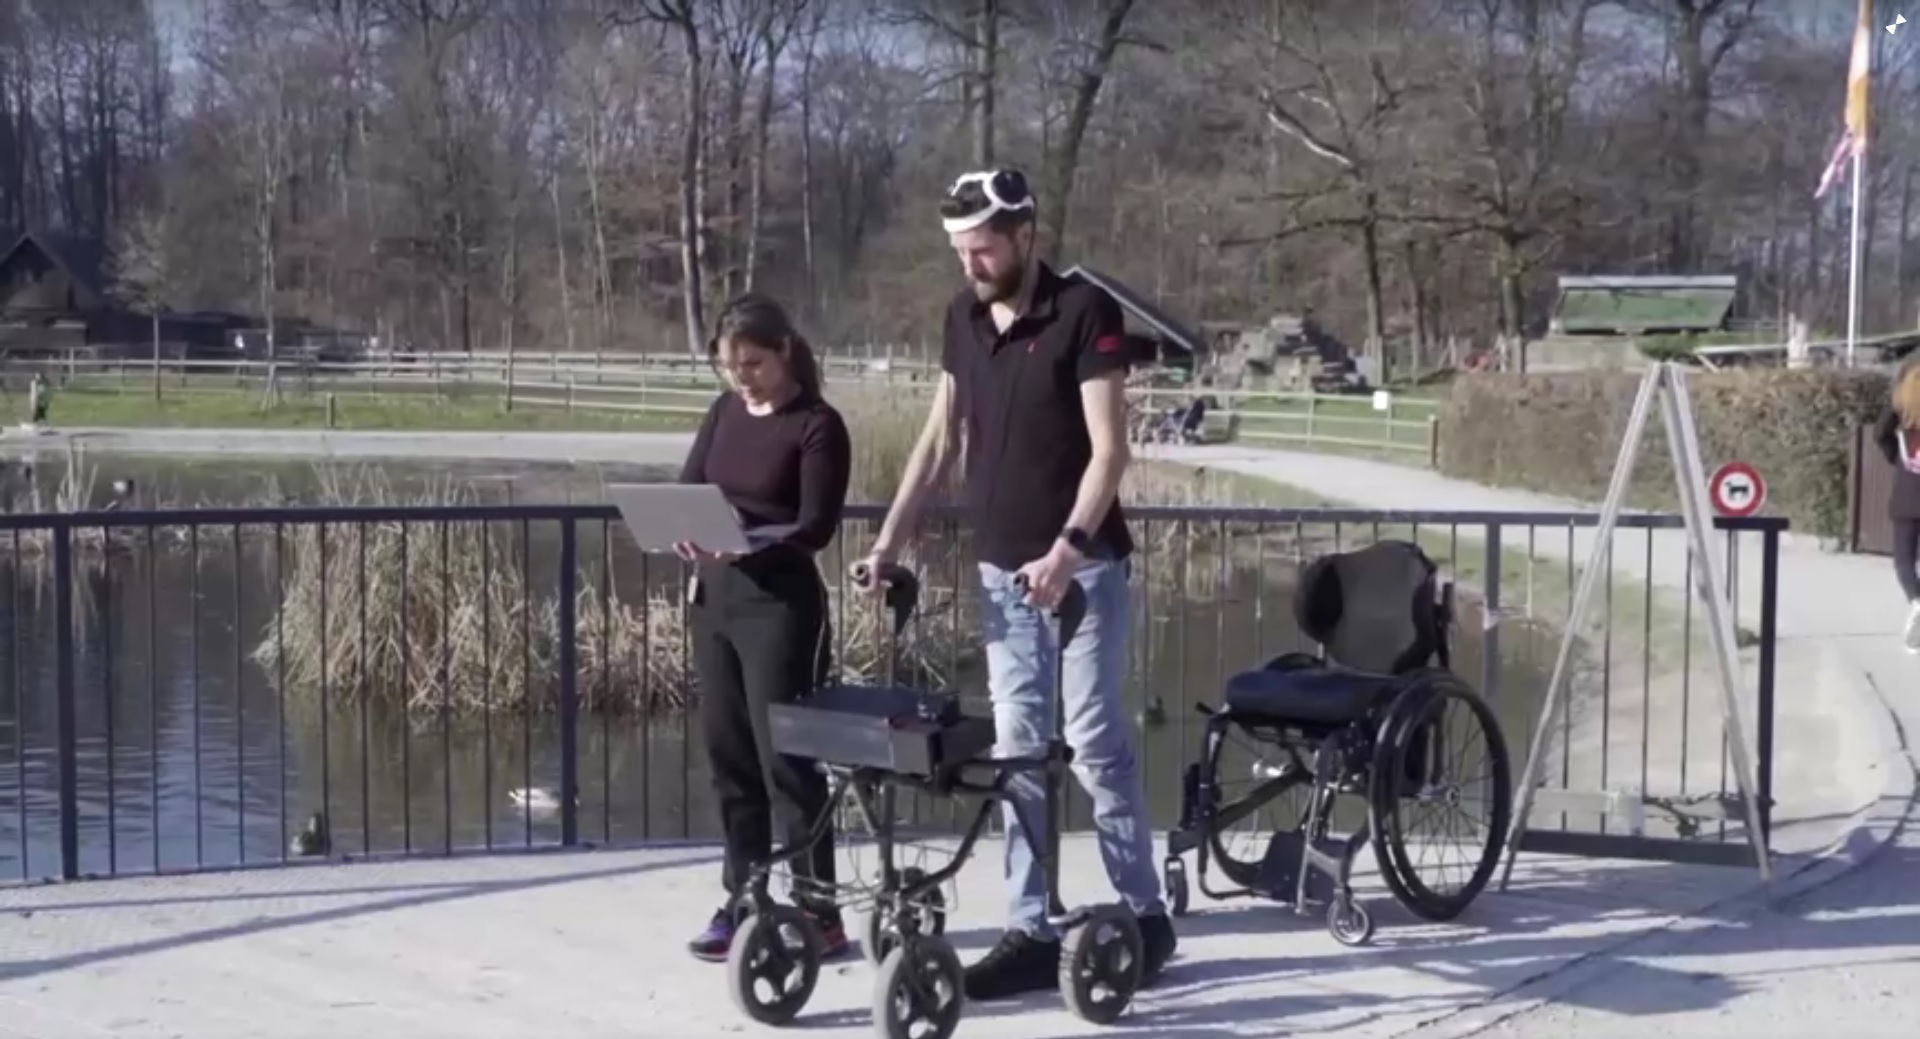 Gert-Jan Oskam 在一次自行车事故中瘫痪后，在过去的 12 年里一直坐在轮椅上，但开创性的手术使他能够在助行器的帮助下再次行走。  /路透社